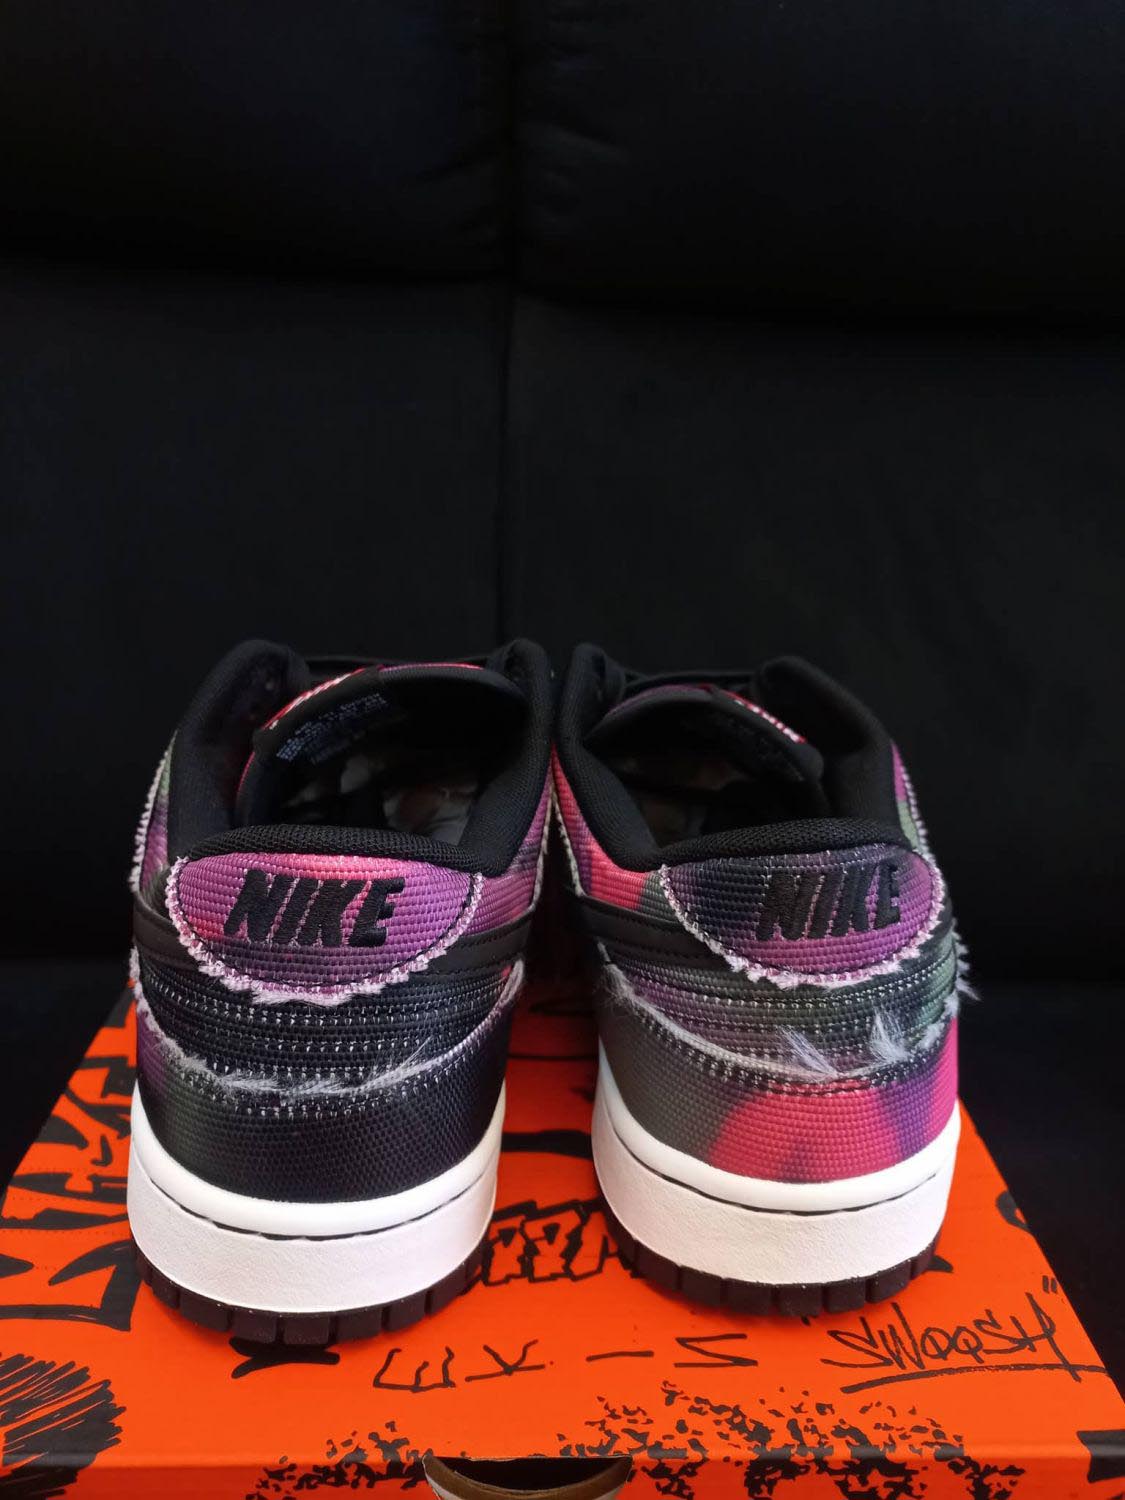 3069 - Nike Dunk Low Graffiti Pink(TM) | Item Details - Phenomenalsole